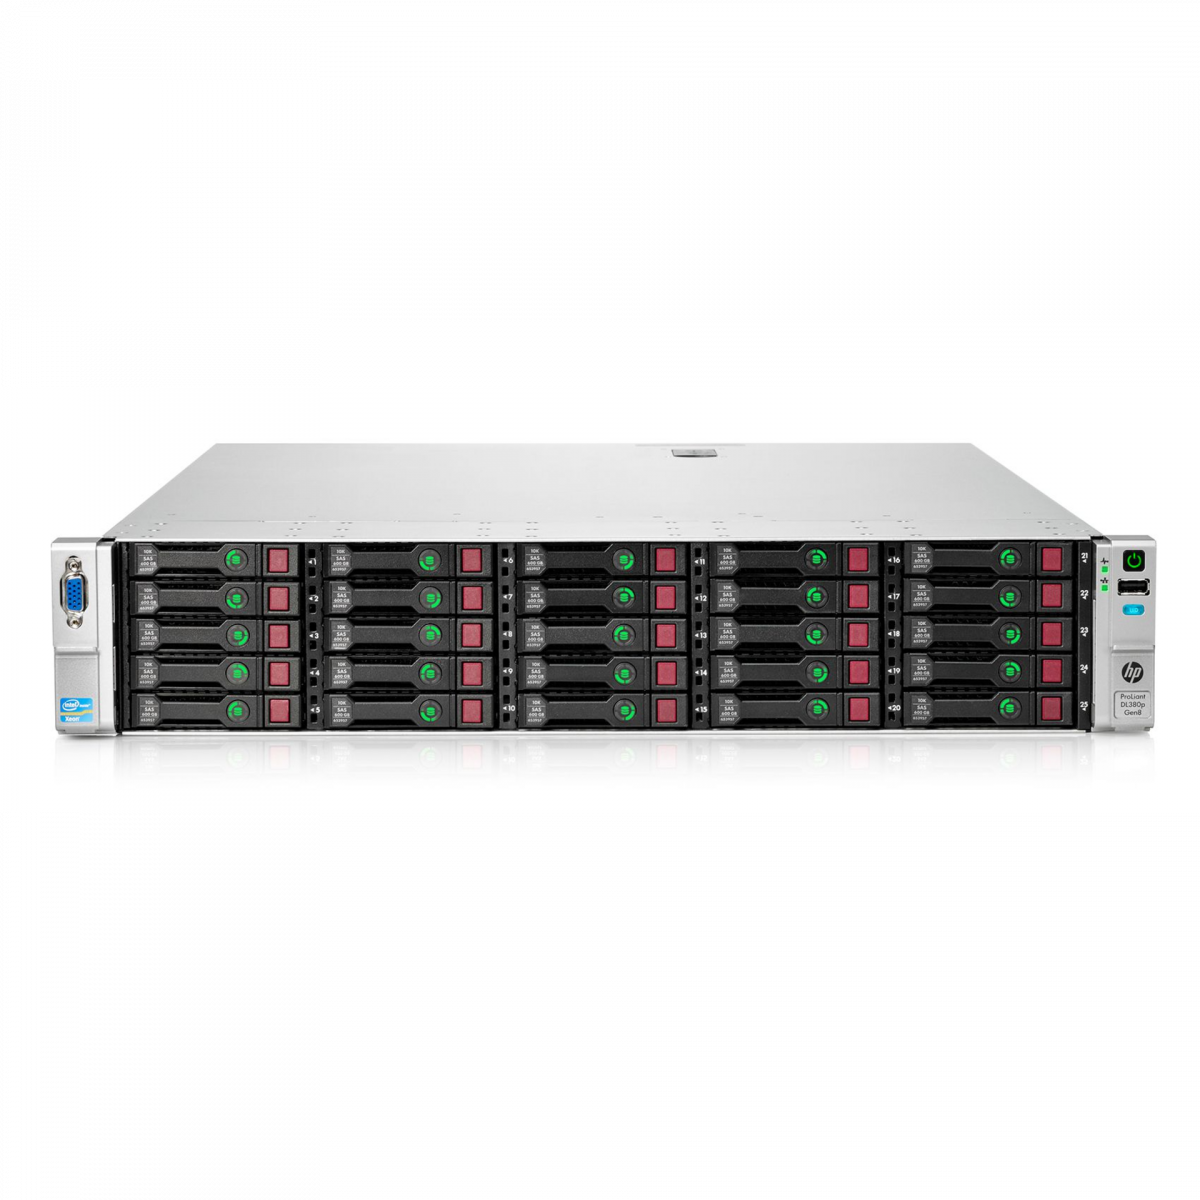 Сервер HP Proliant DL380p Gen8, процессор Intel Xeon 6C E5-2620, 16GB DRAM, 25SFF, P420i/1GB FBWC